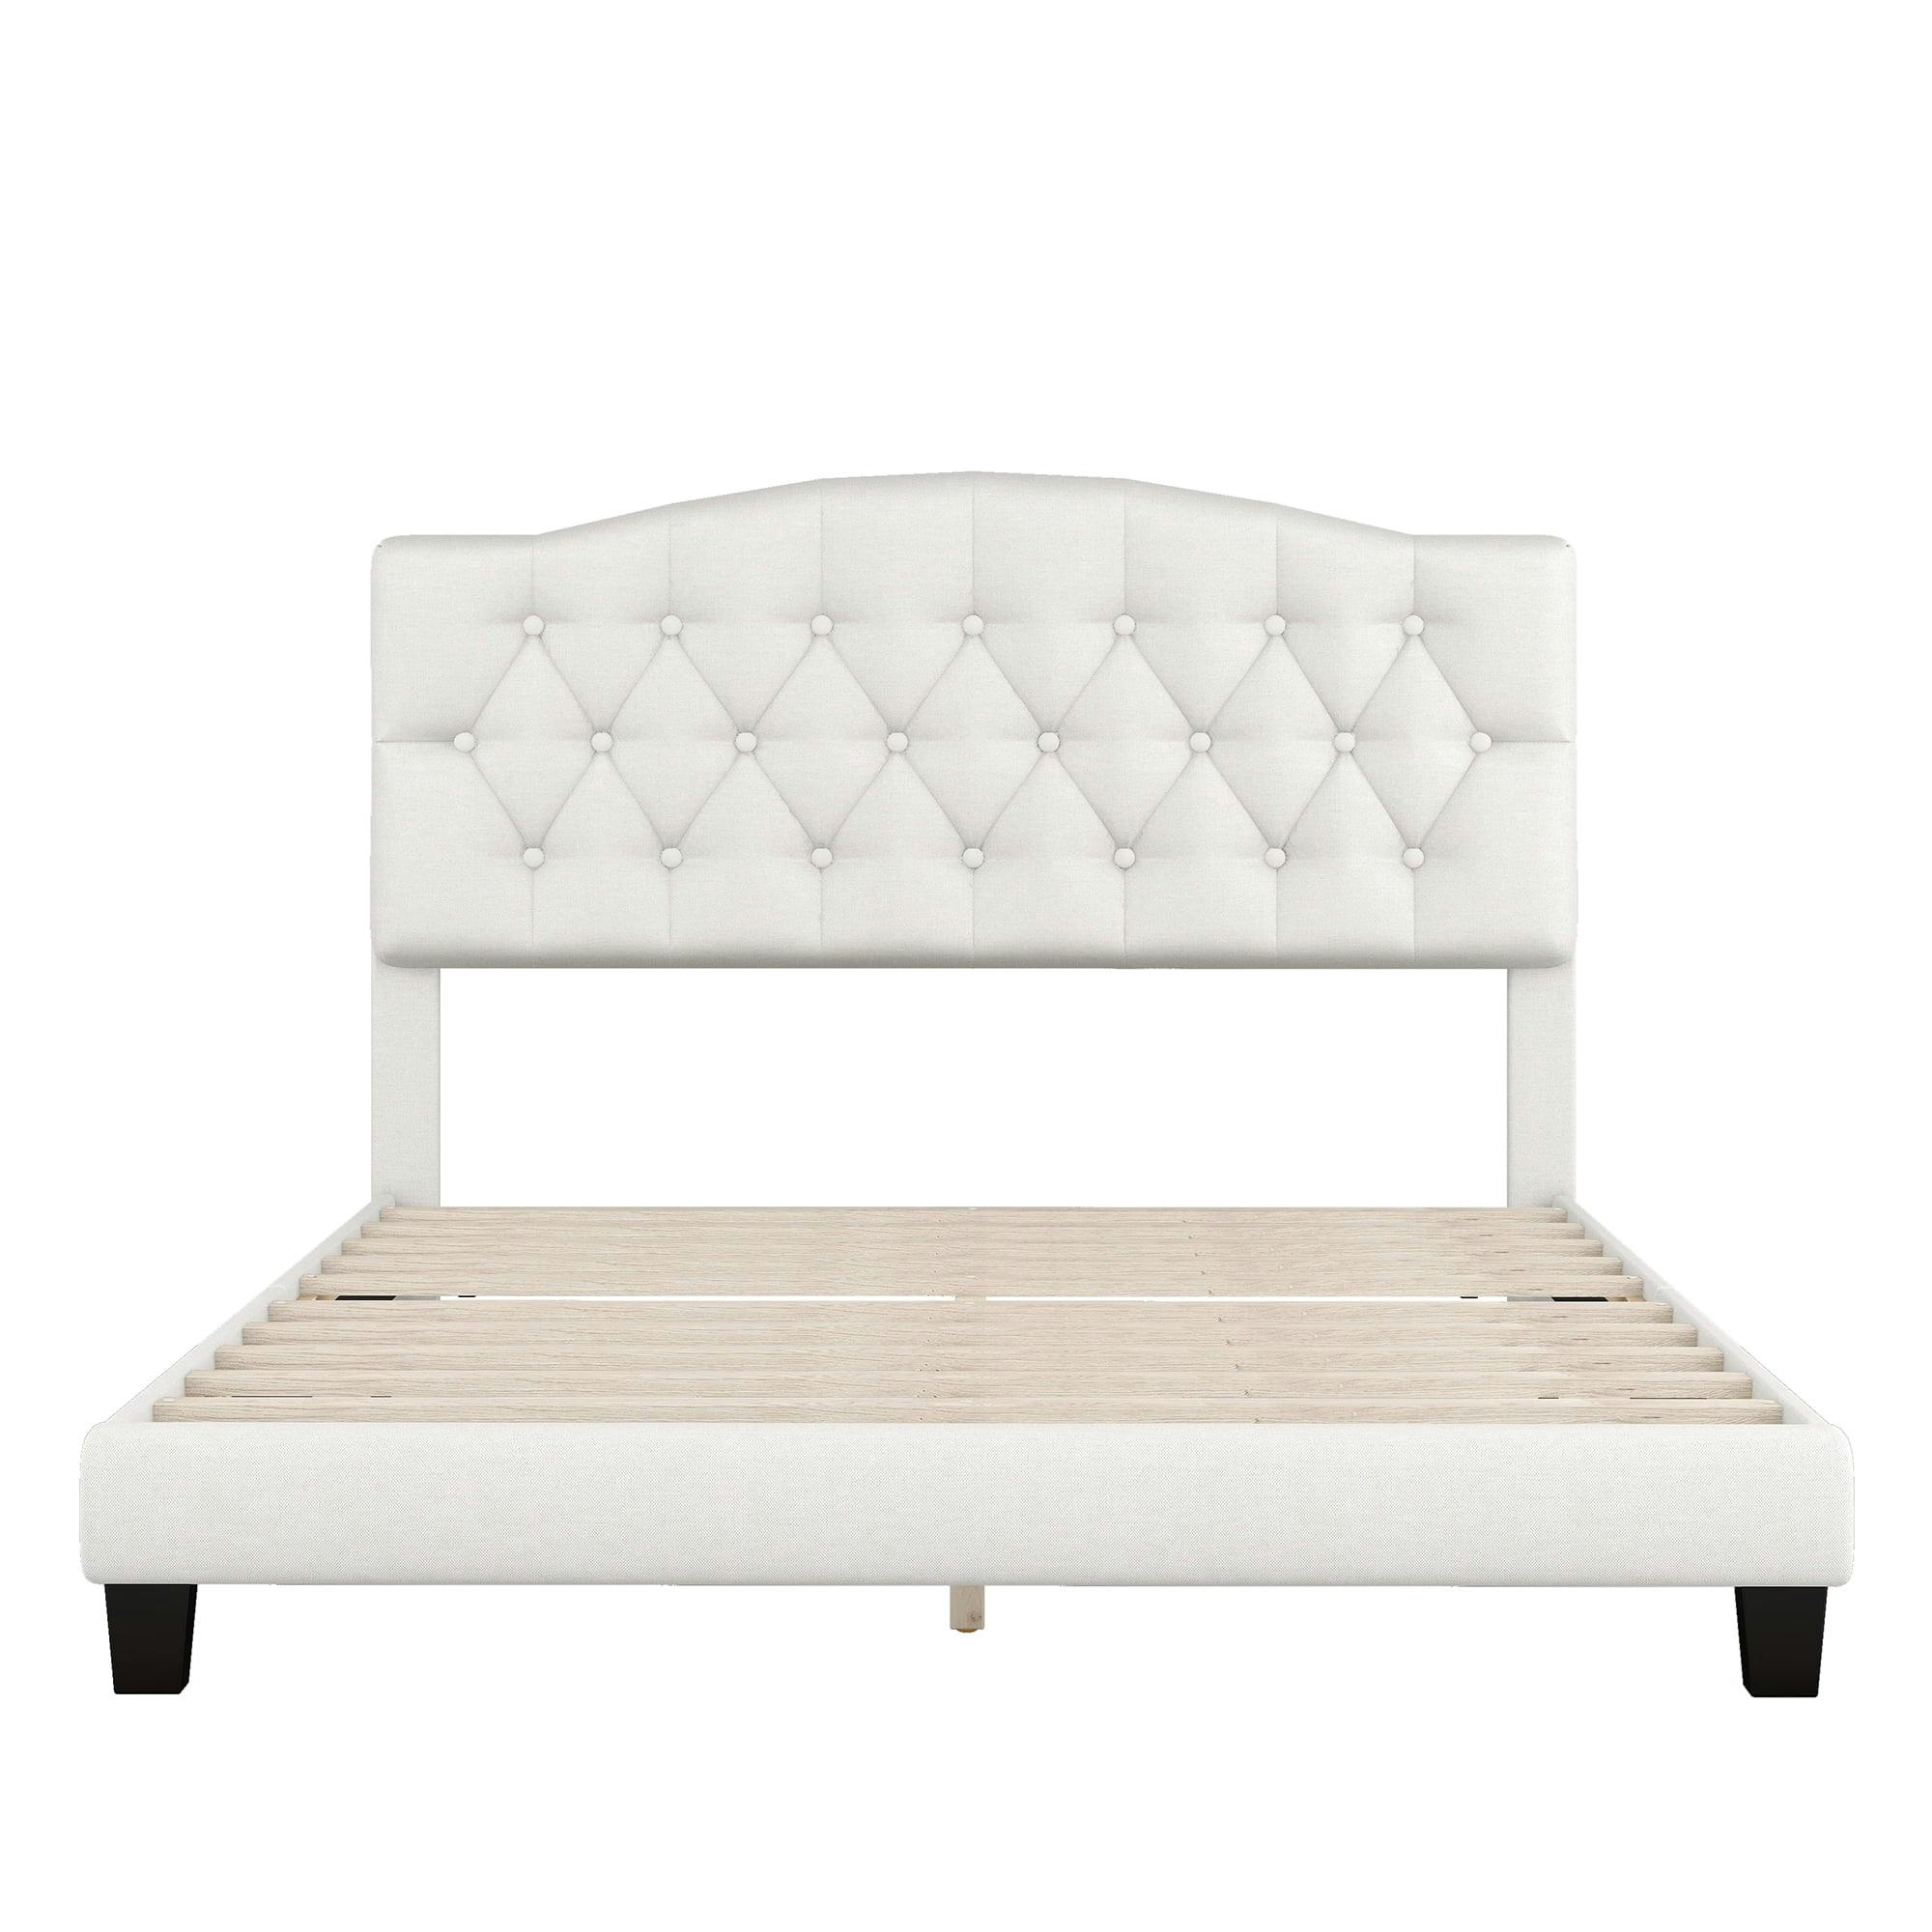 Elegant Beige Queen Upholstered Platform Bed with Tufted Headboard